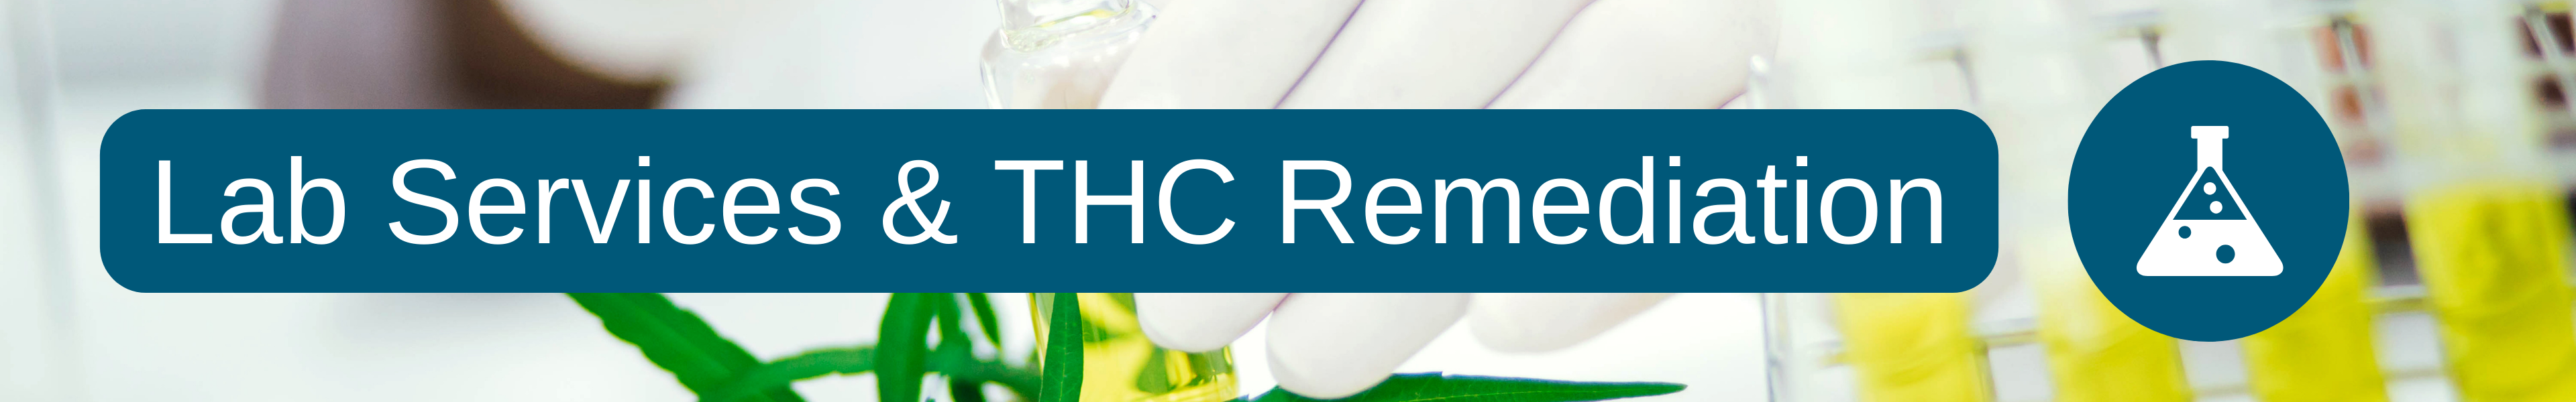 Lab Services & THC Remediation